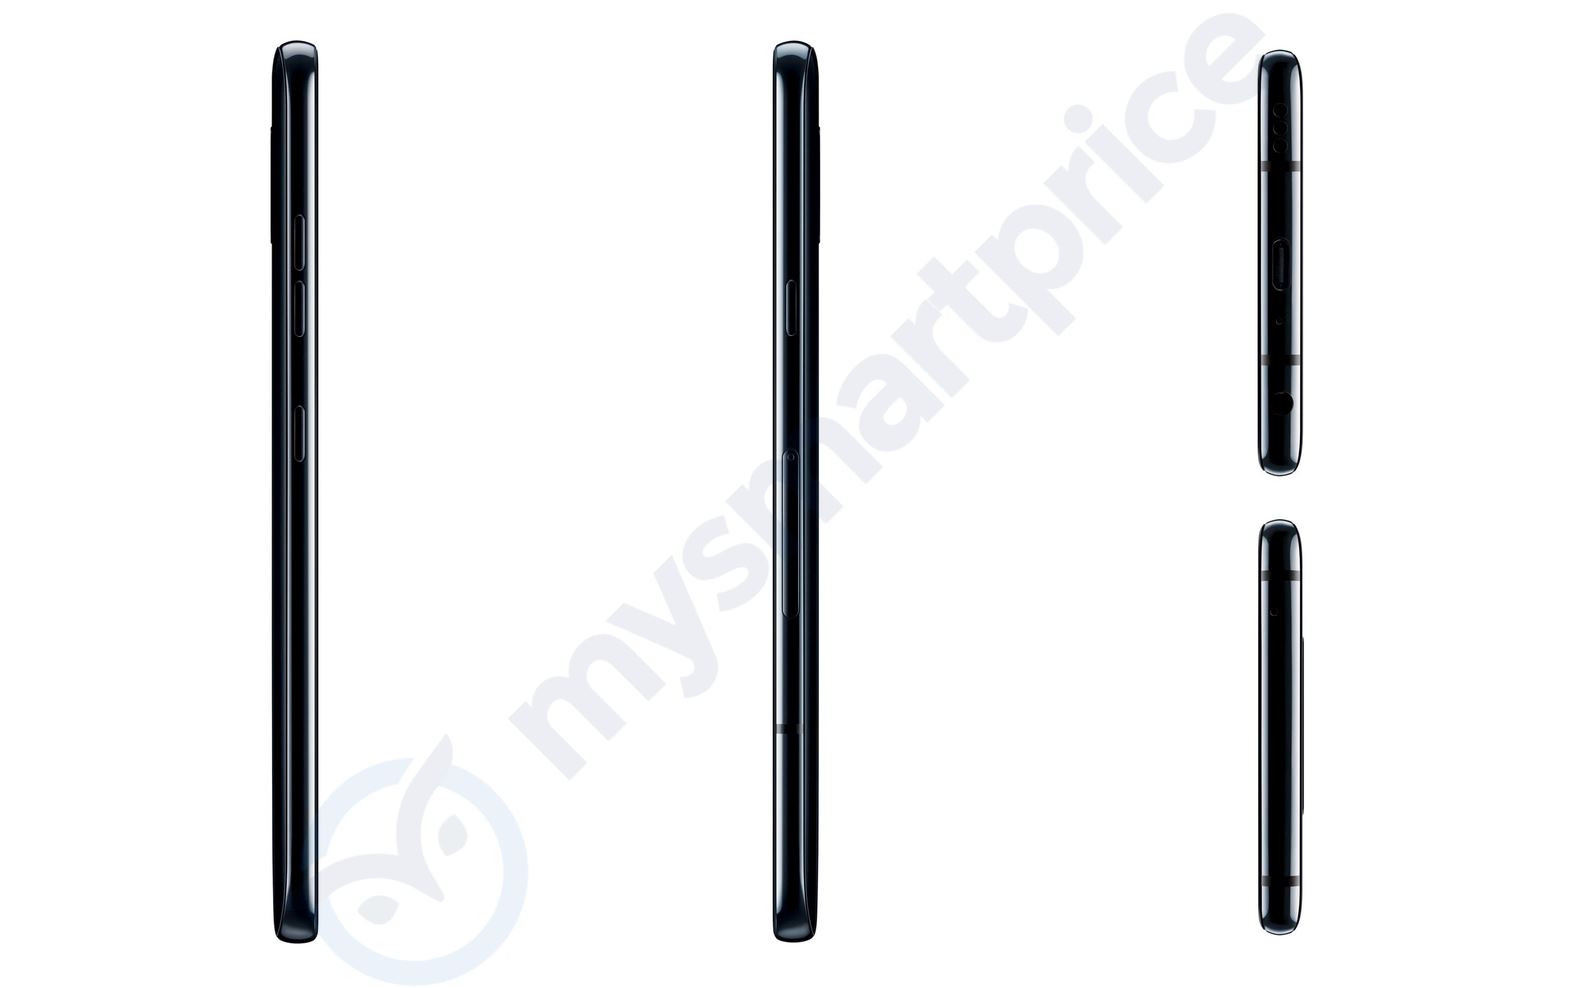 LG V40 ThinQ KOPIEER iPhone X Huawei 2